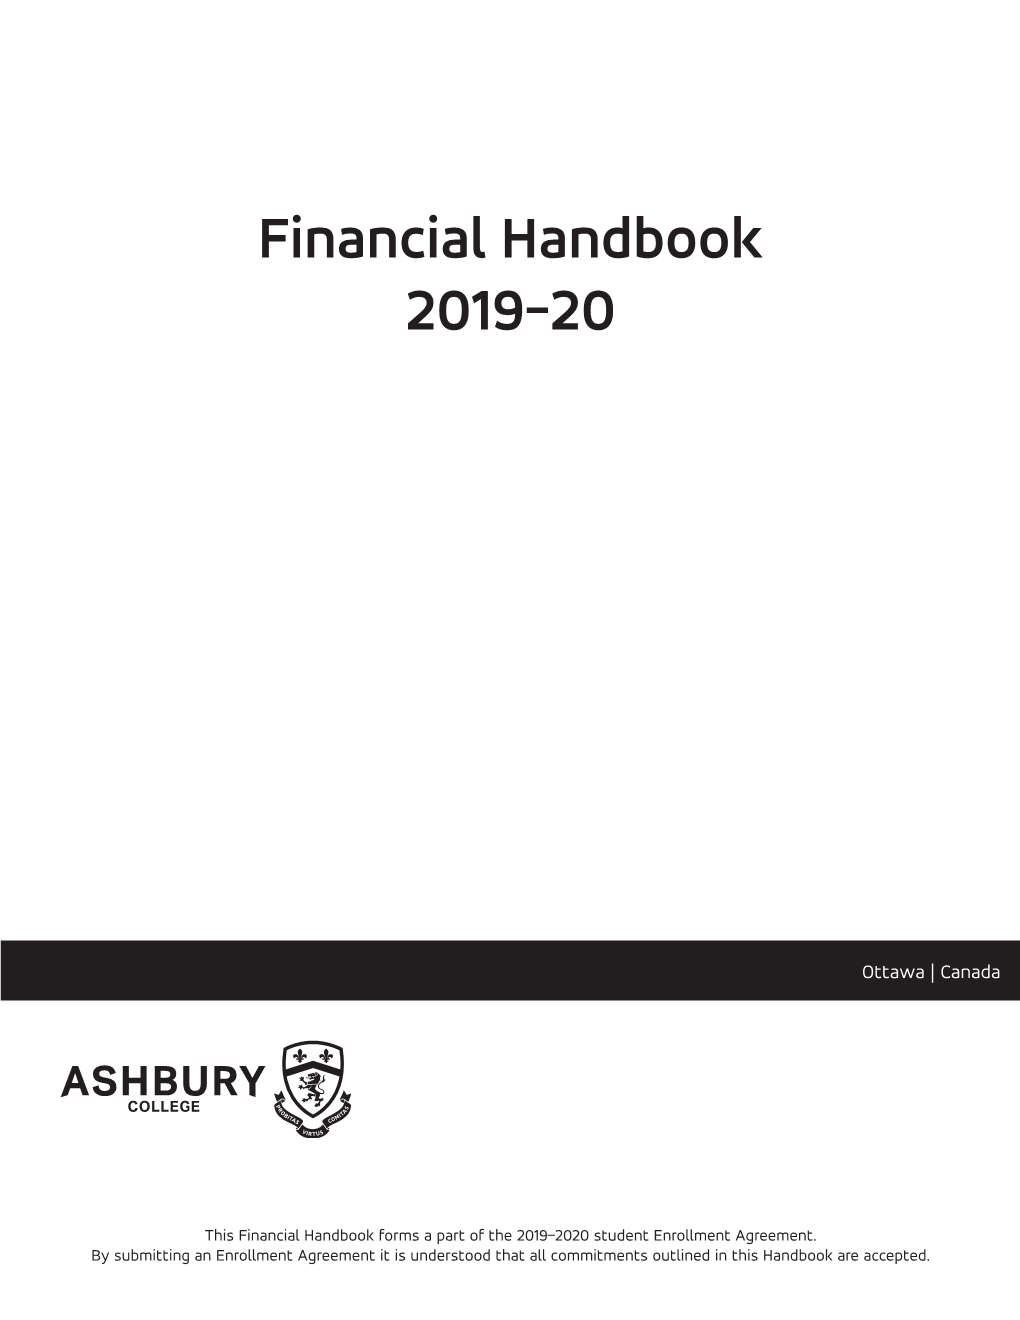 Financial Handbook 2019-20